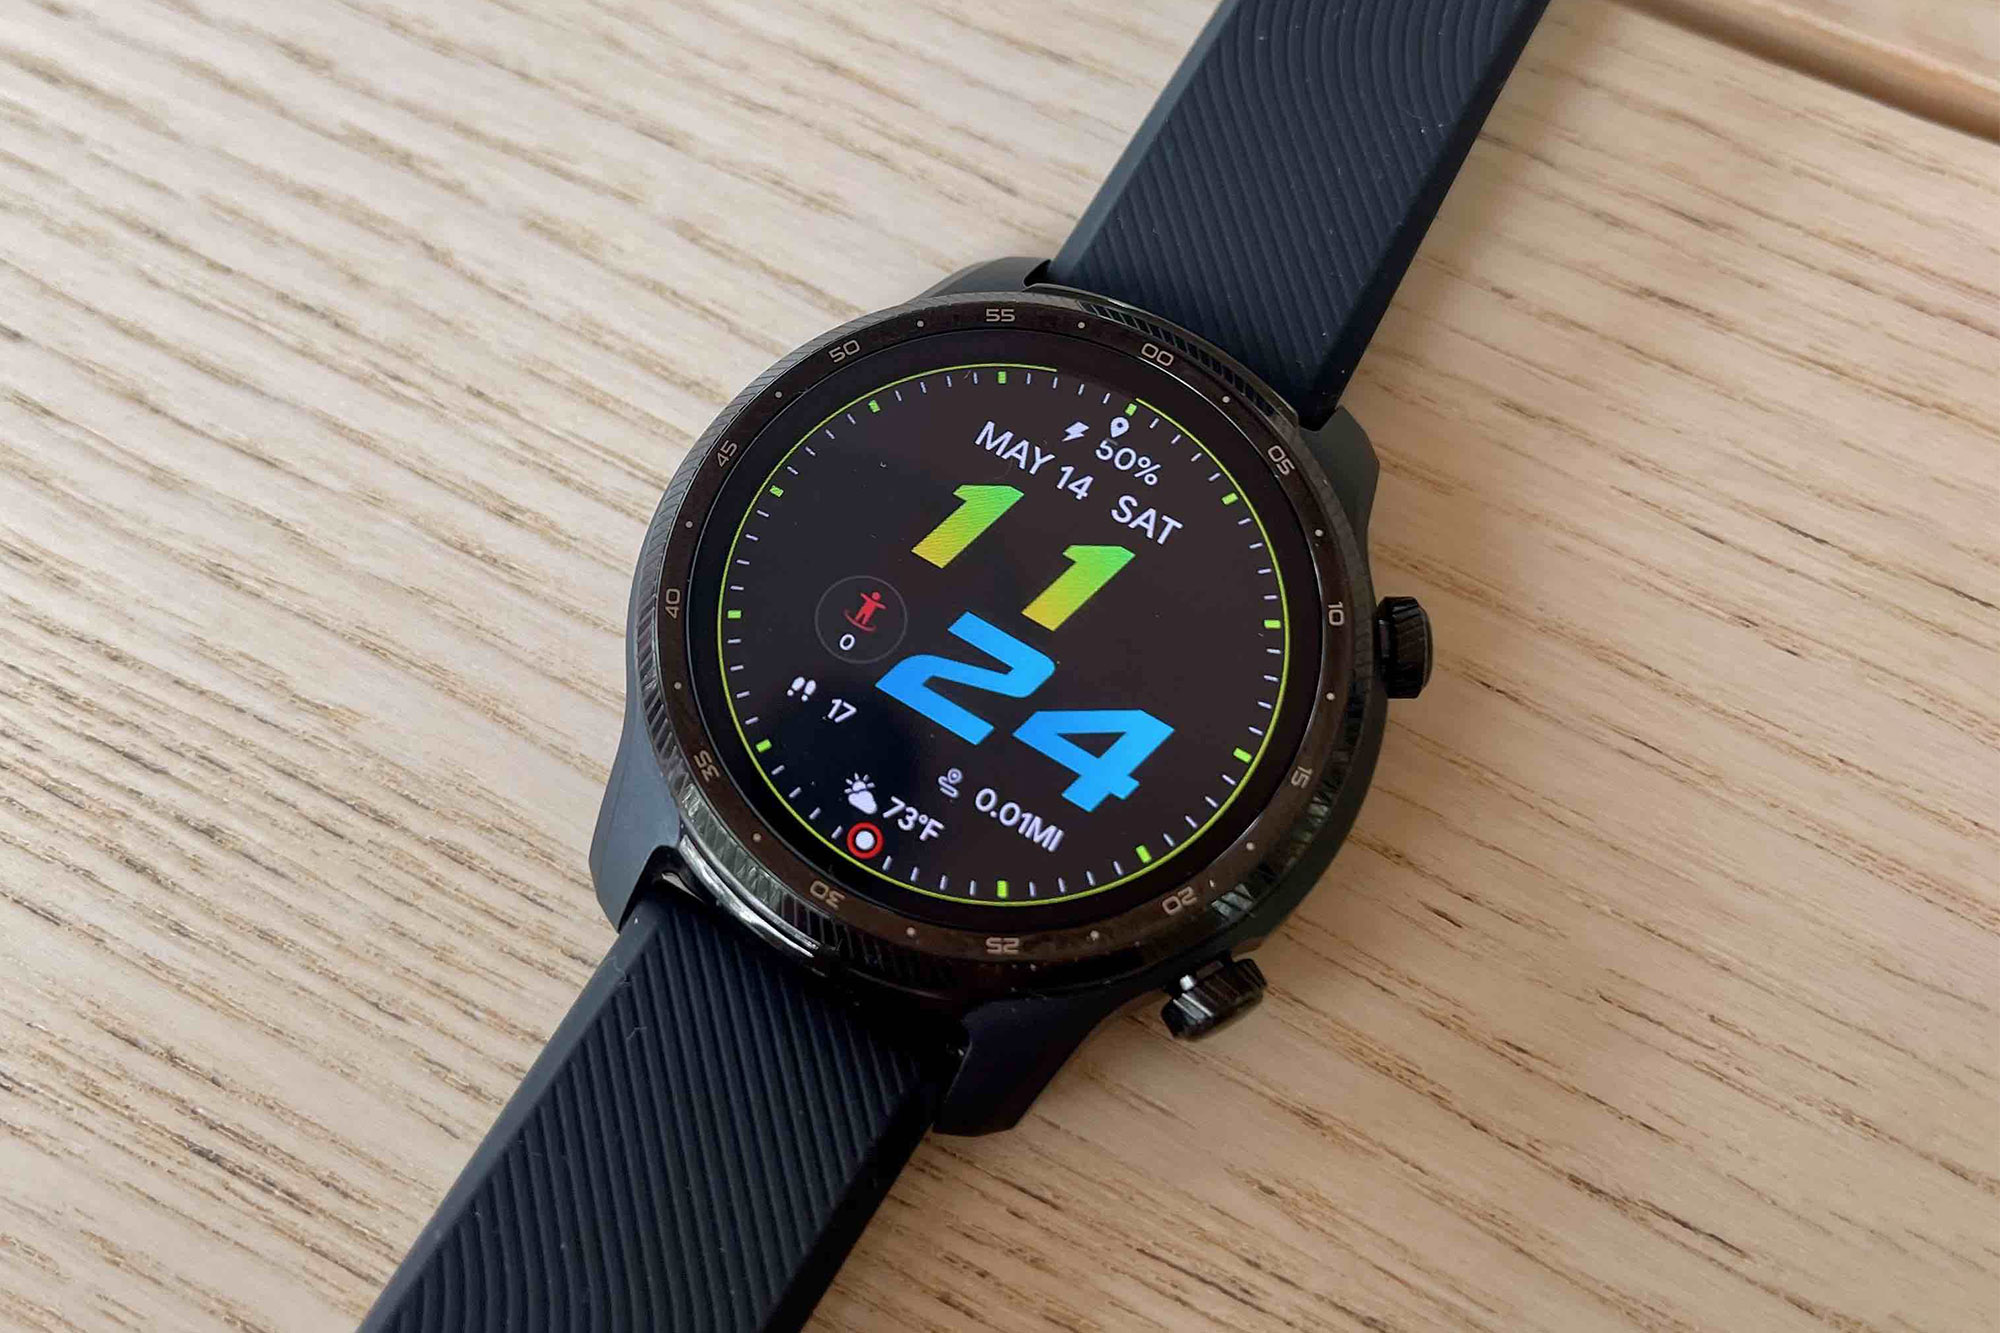 TicWatch Pro 3 Ultra GPS Review - Near Flawless Wear OS Smartwatch -  KeenGamer